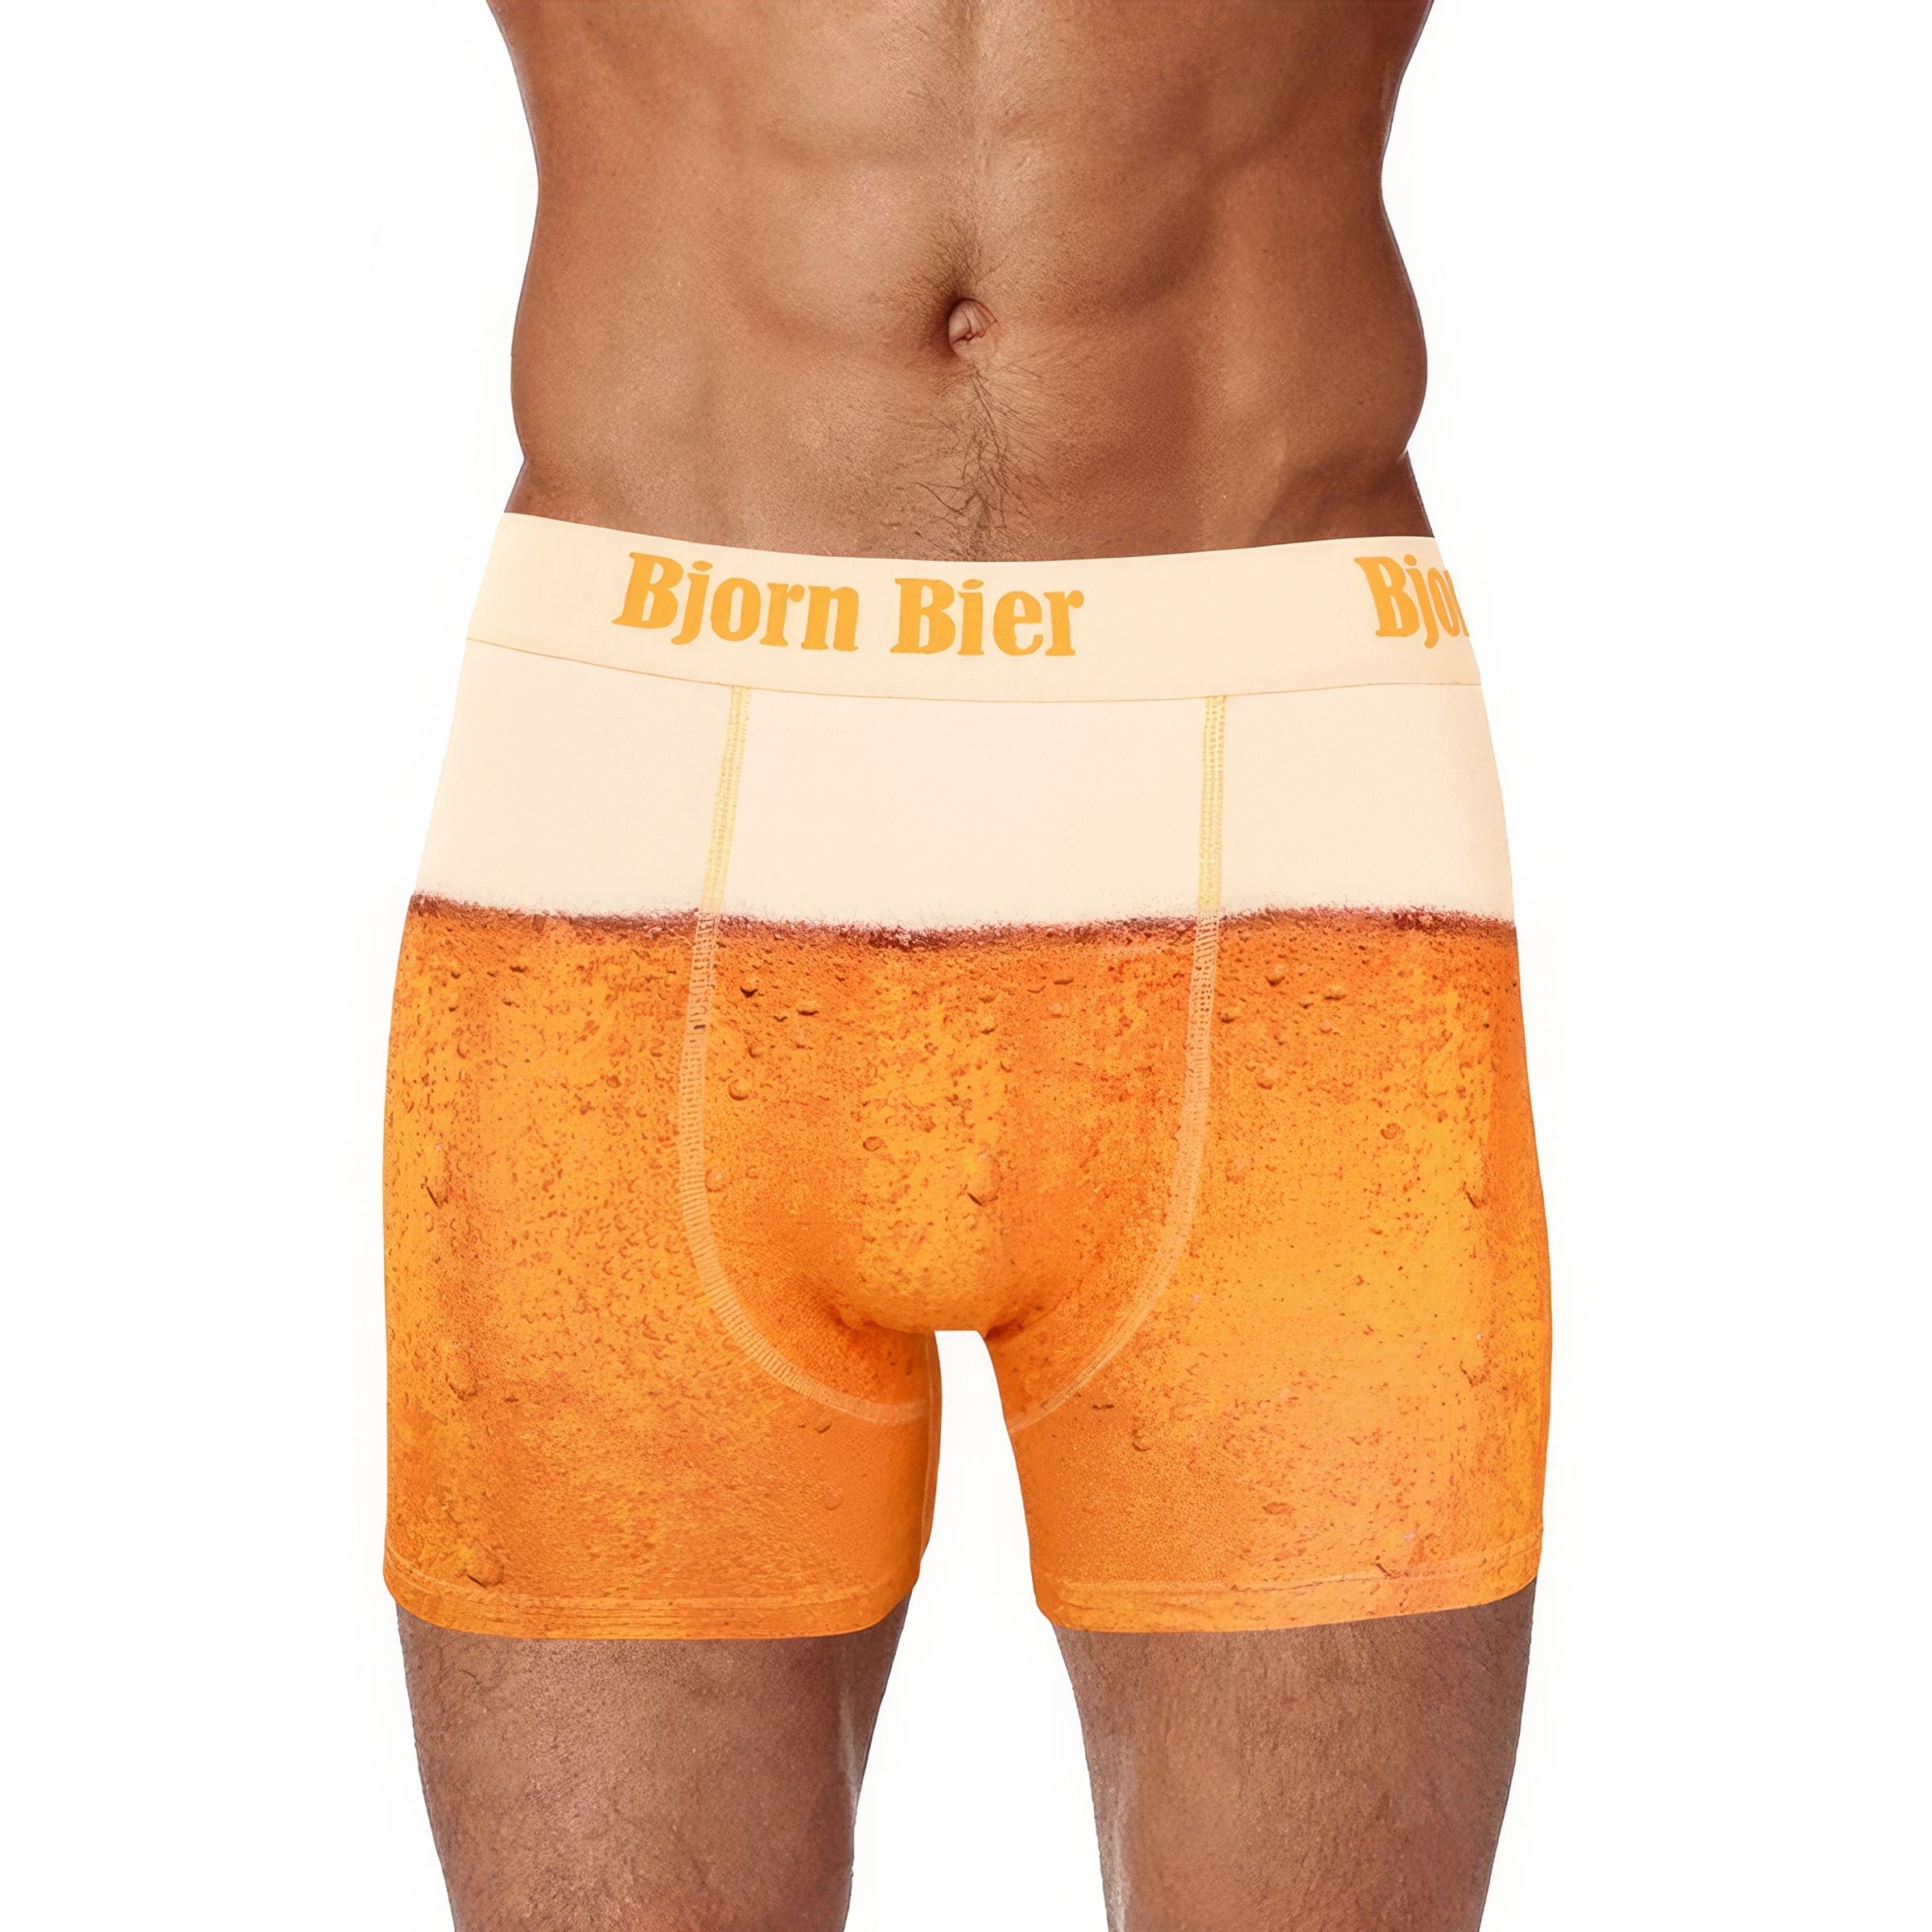 Bjorn Bier Boxershorts - Medium